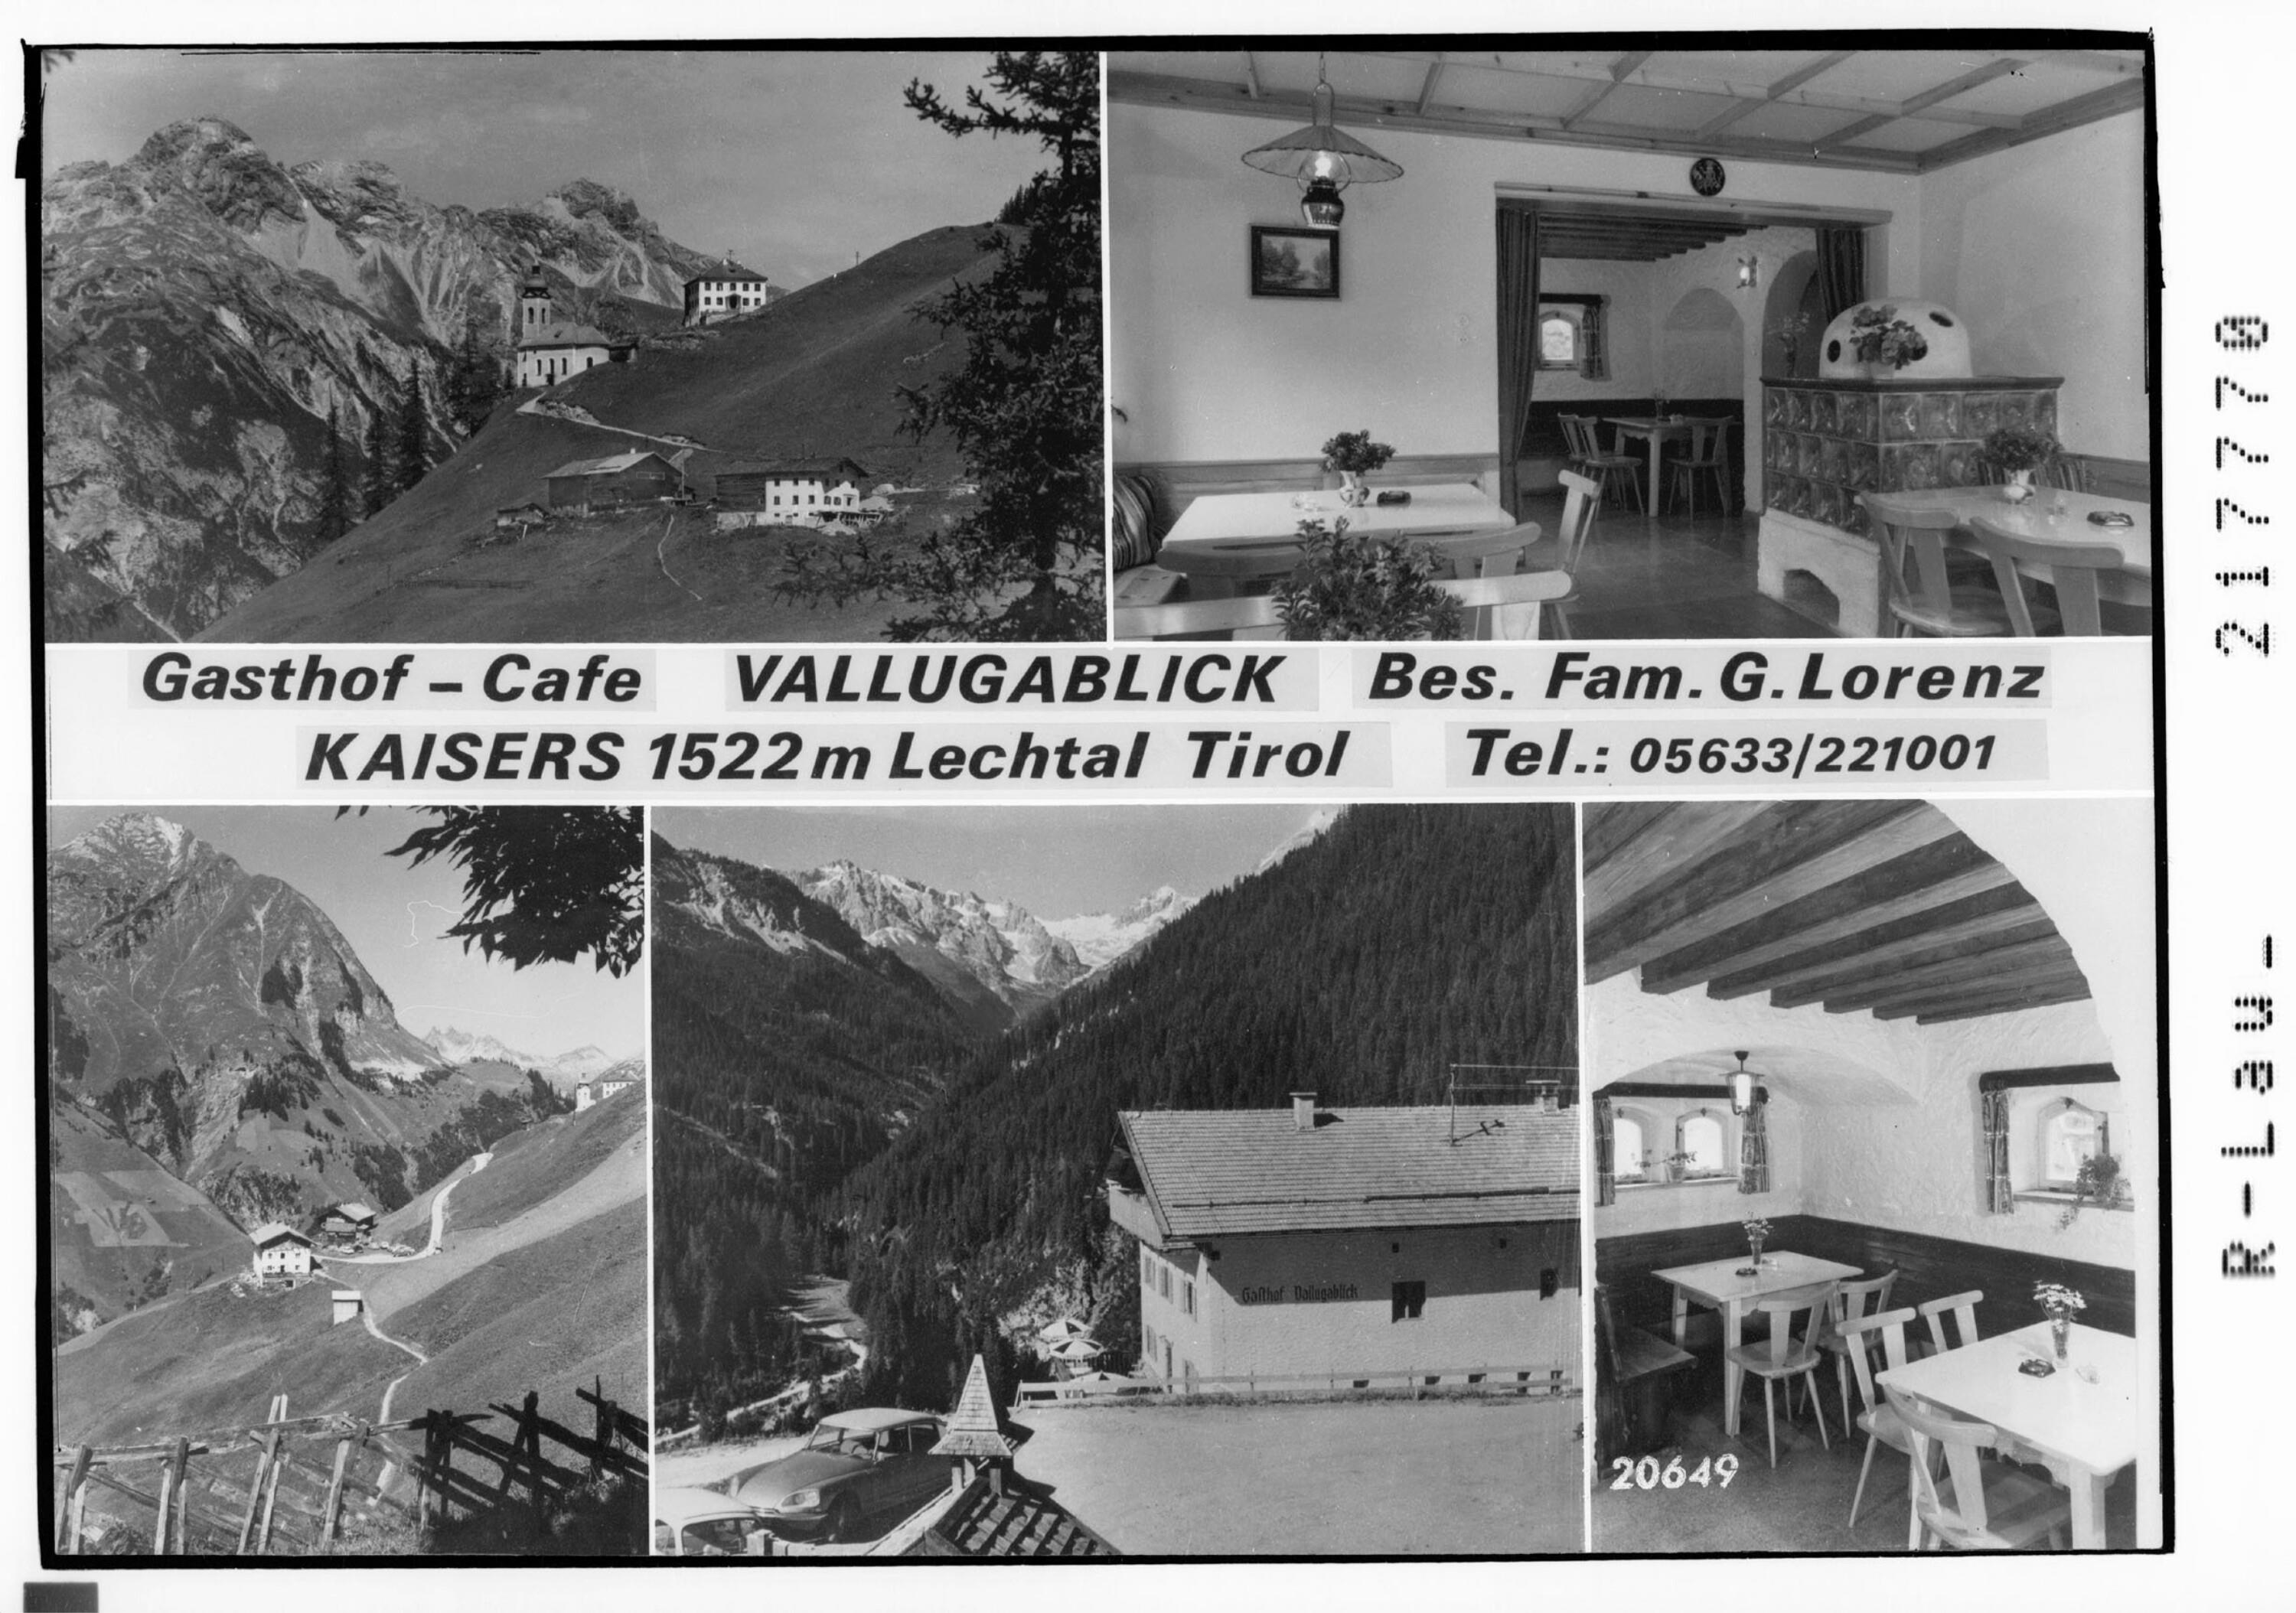 Gasthof - Cafe Vallugablick Kaisers 1522 m Lechtal Tirol></div>


    <hr>
    <div class=